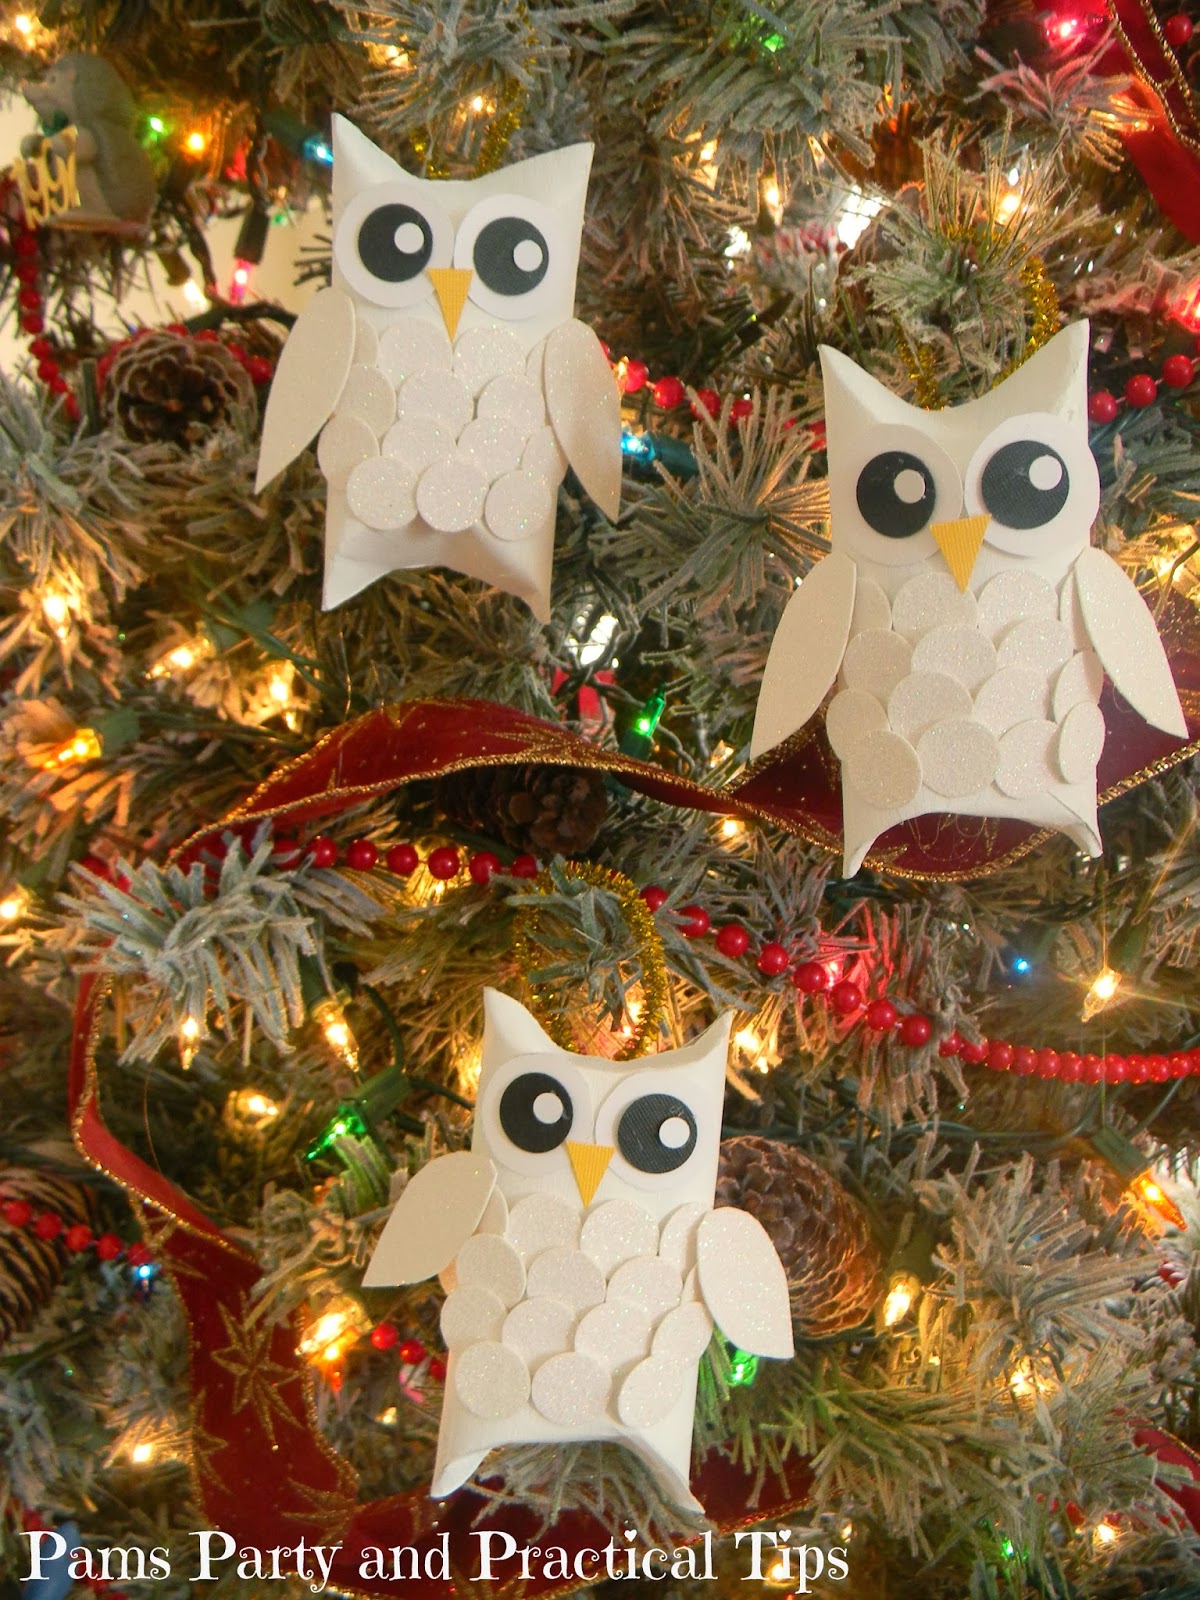 Snow Owl Ornaments